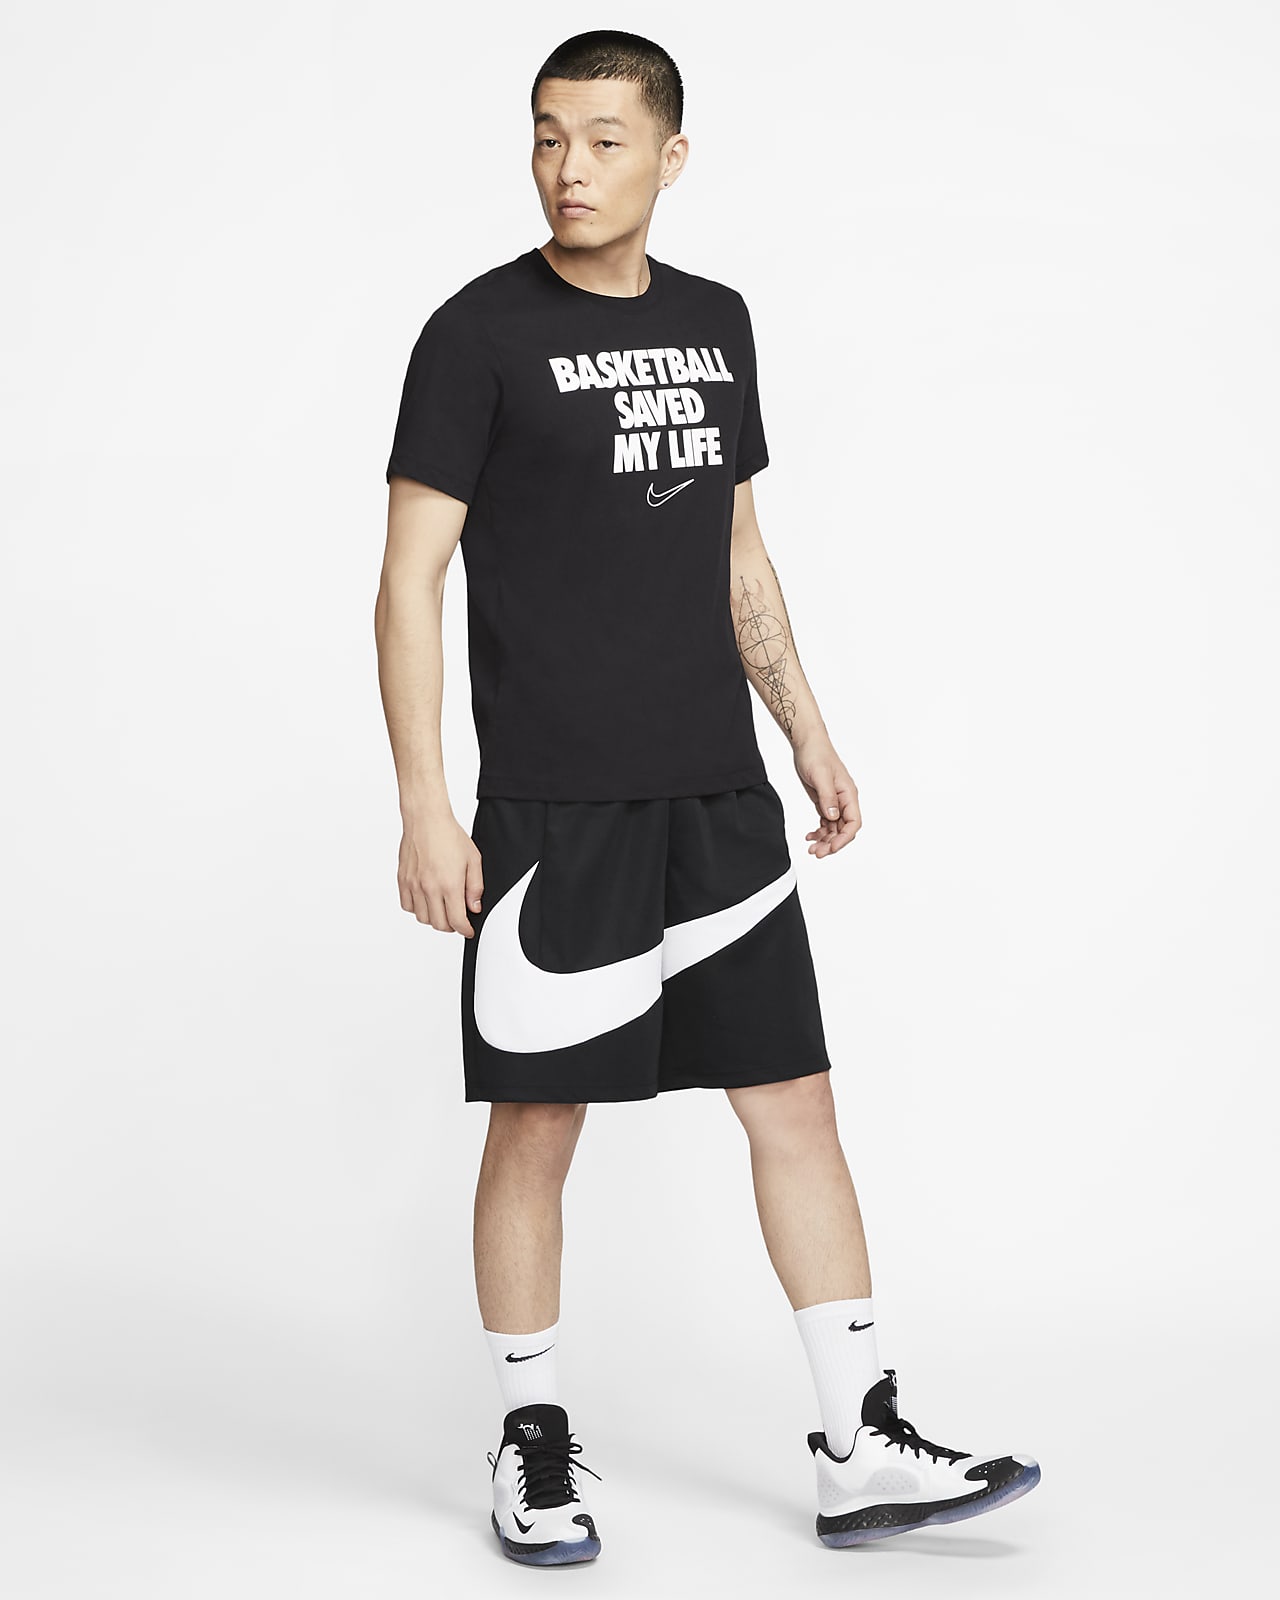 Nike Dri-FIT 'My Life' Men's Basketball T-Shirt. Nike